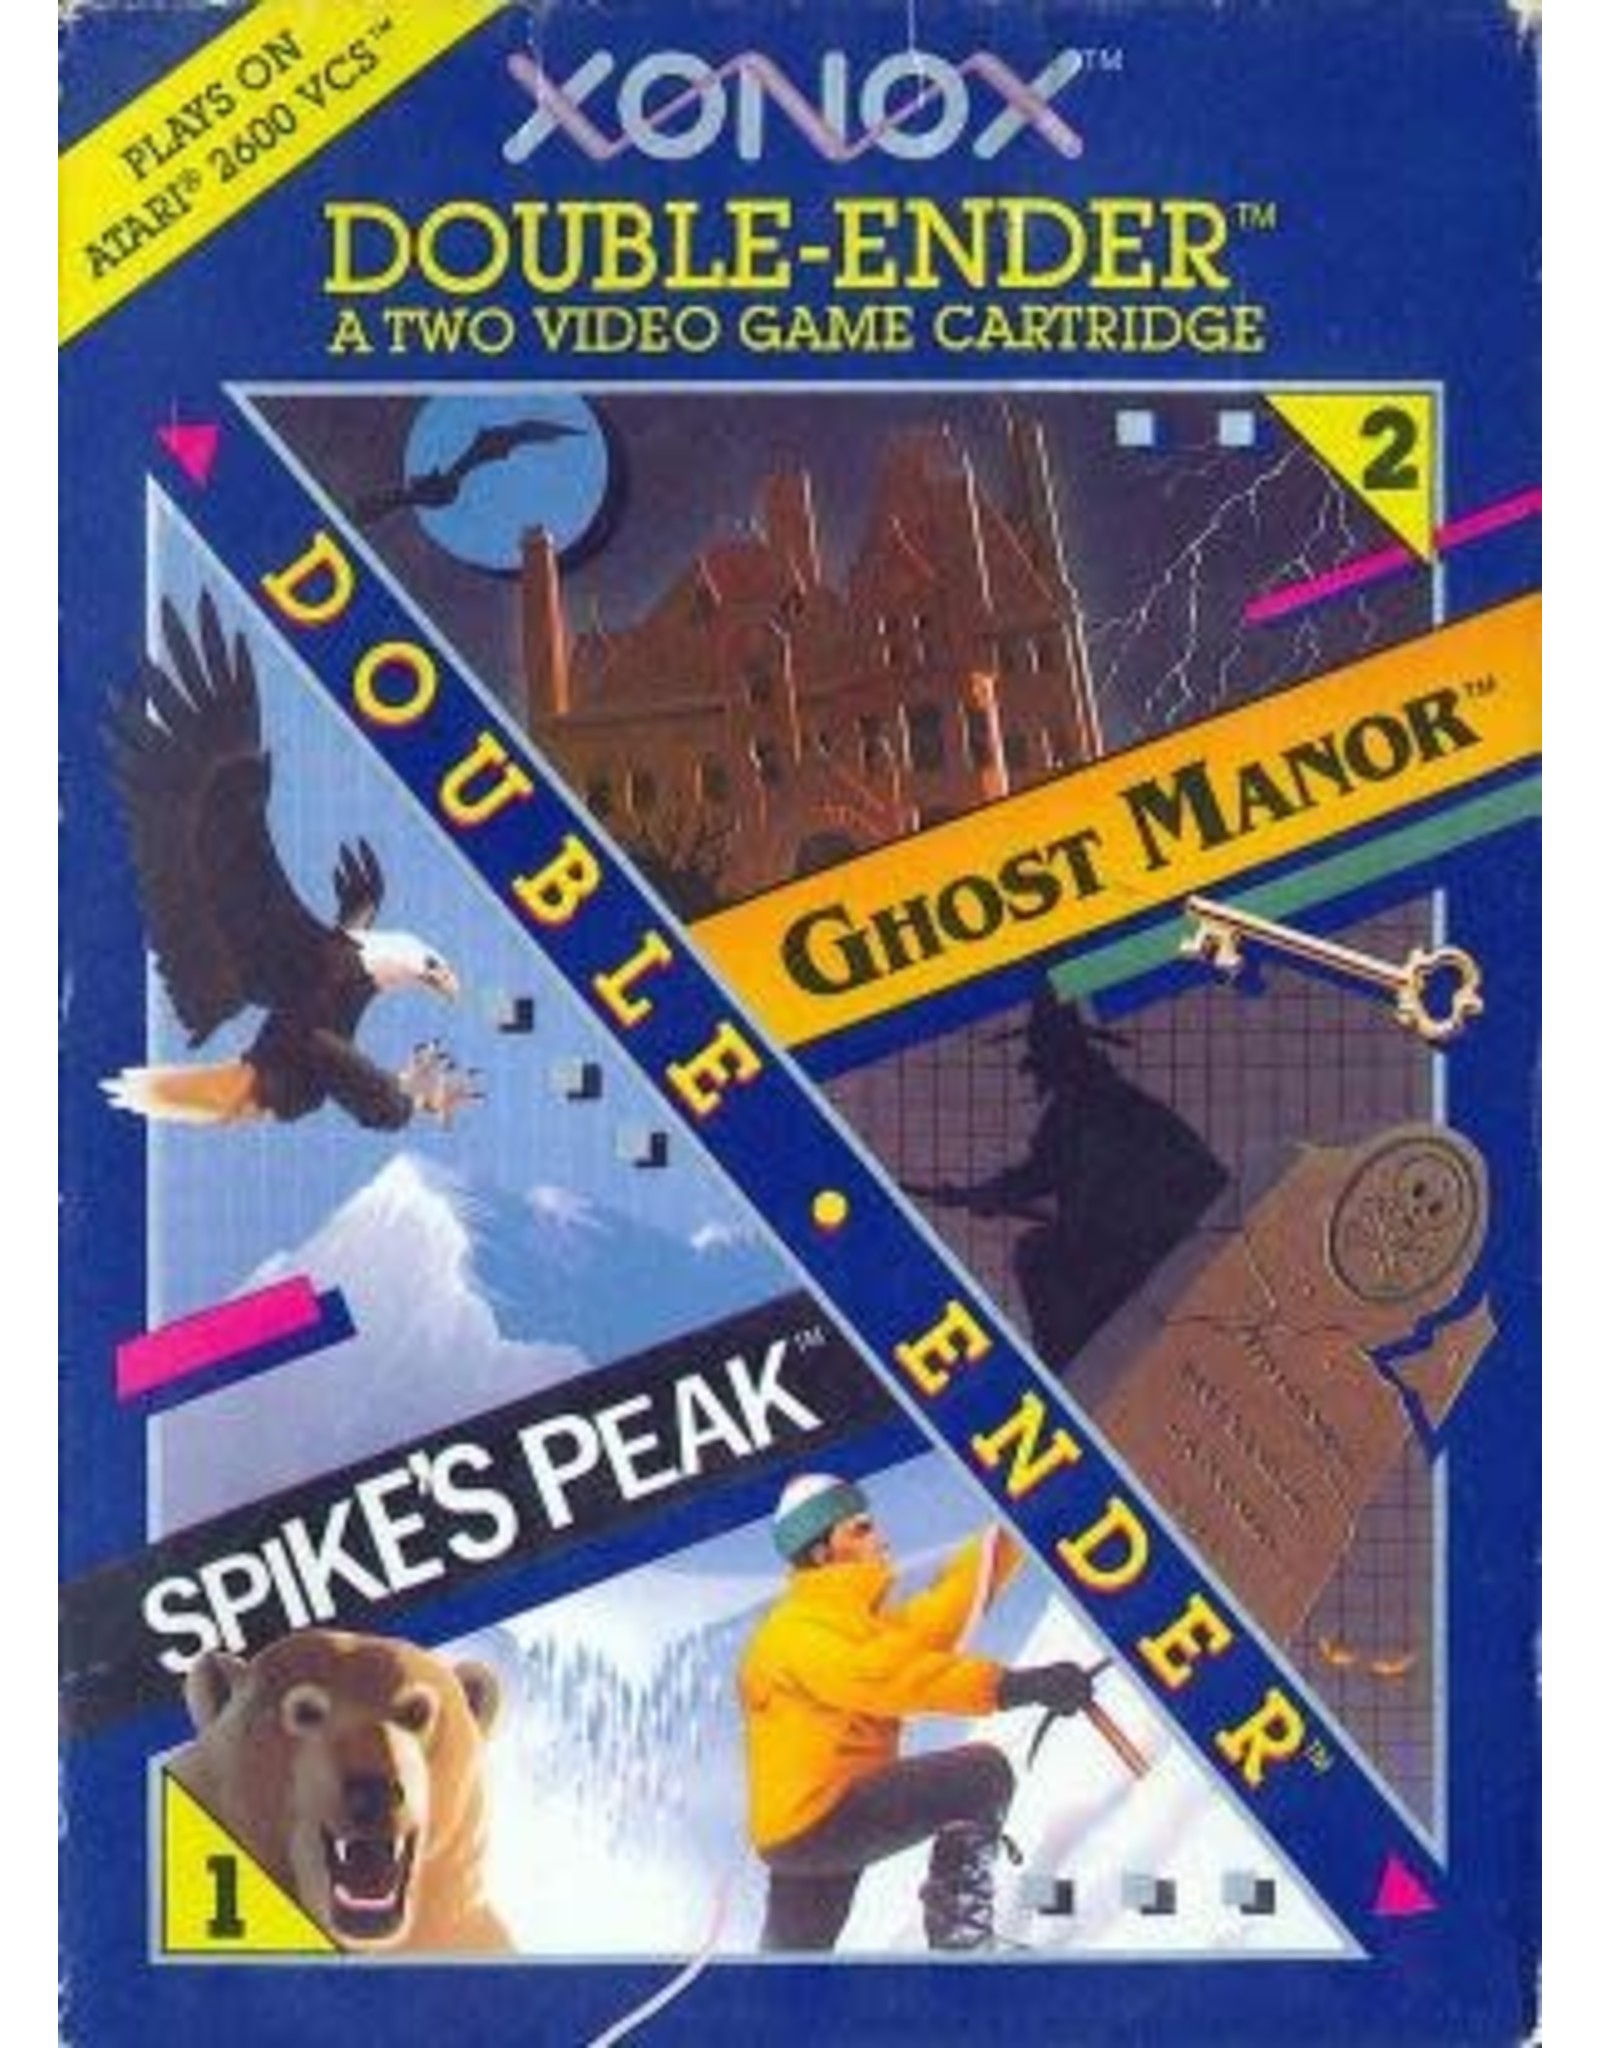 Atari 2600 Ghost Manor / Spikes Peak (Cart Only, Damaged Label)